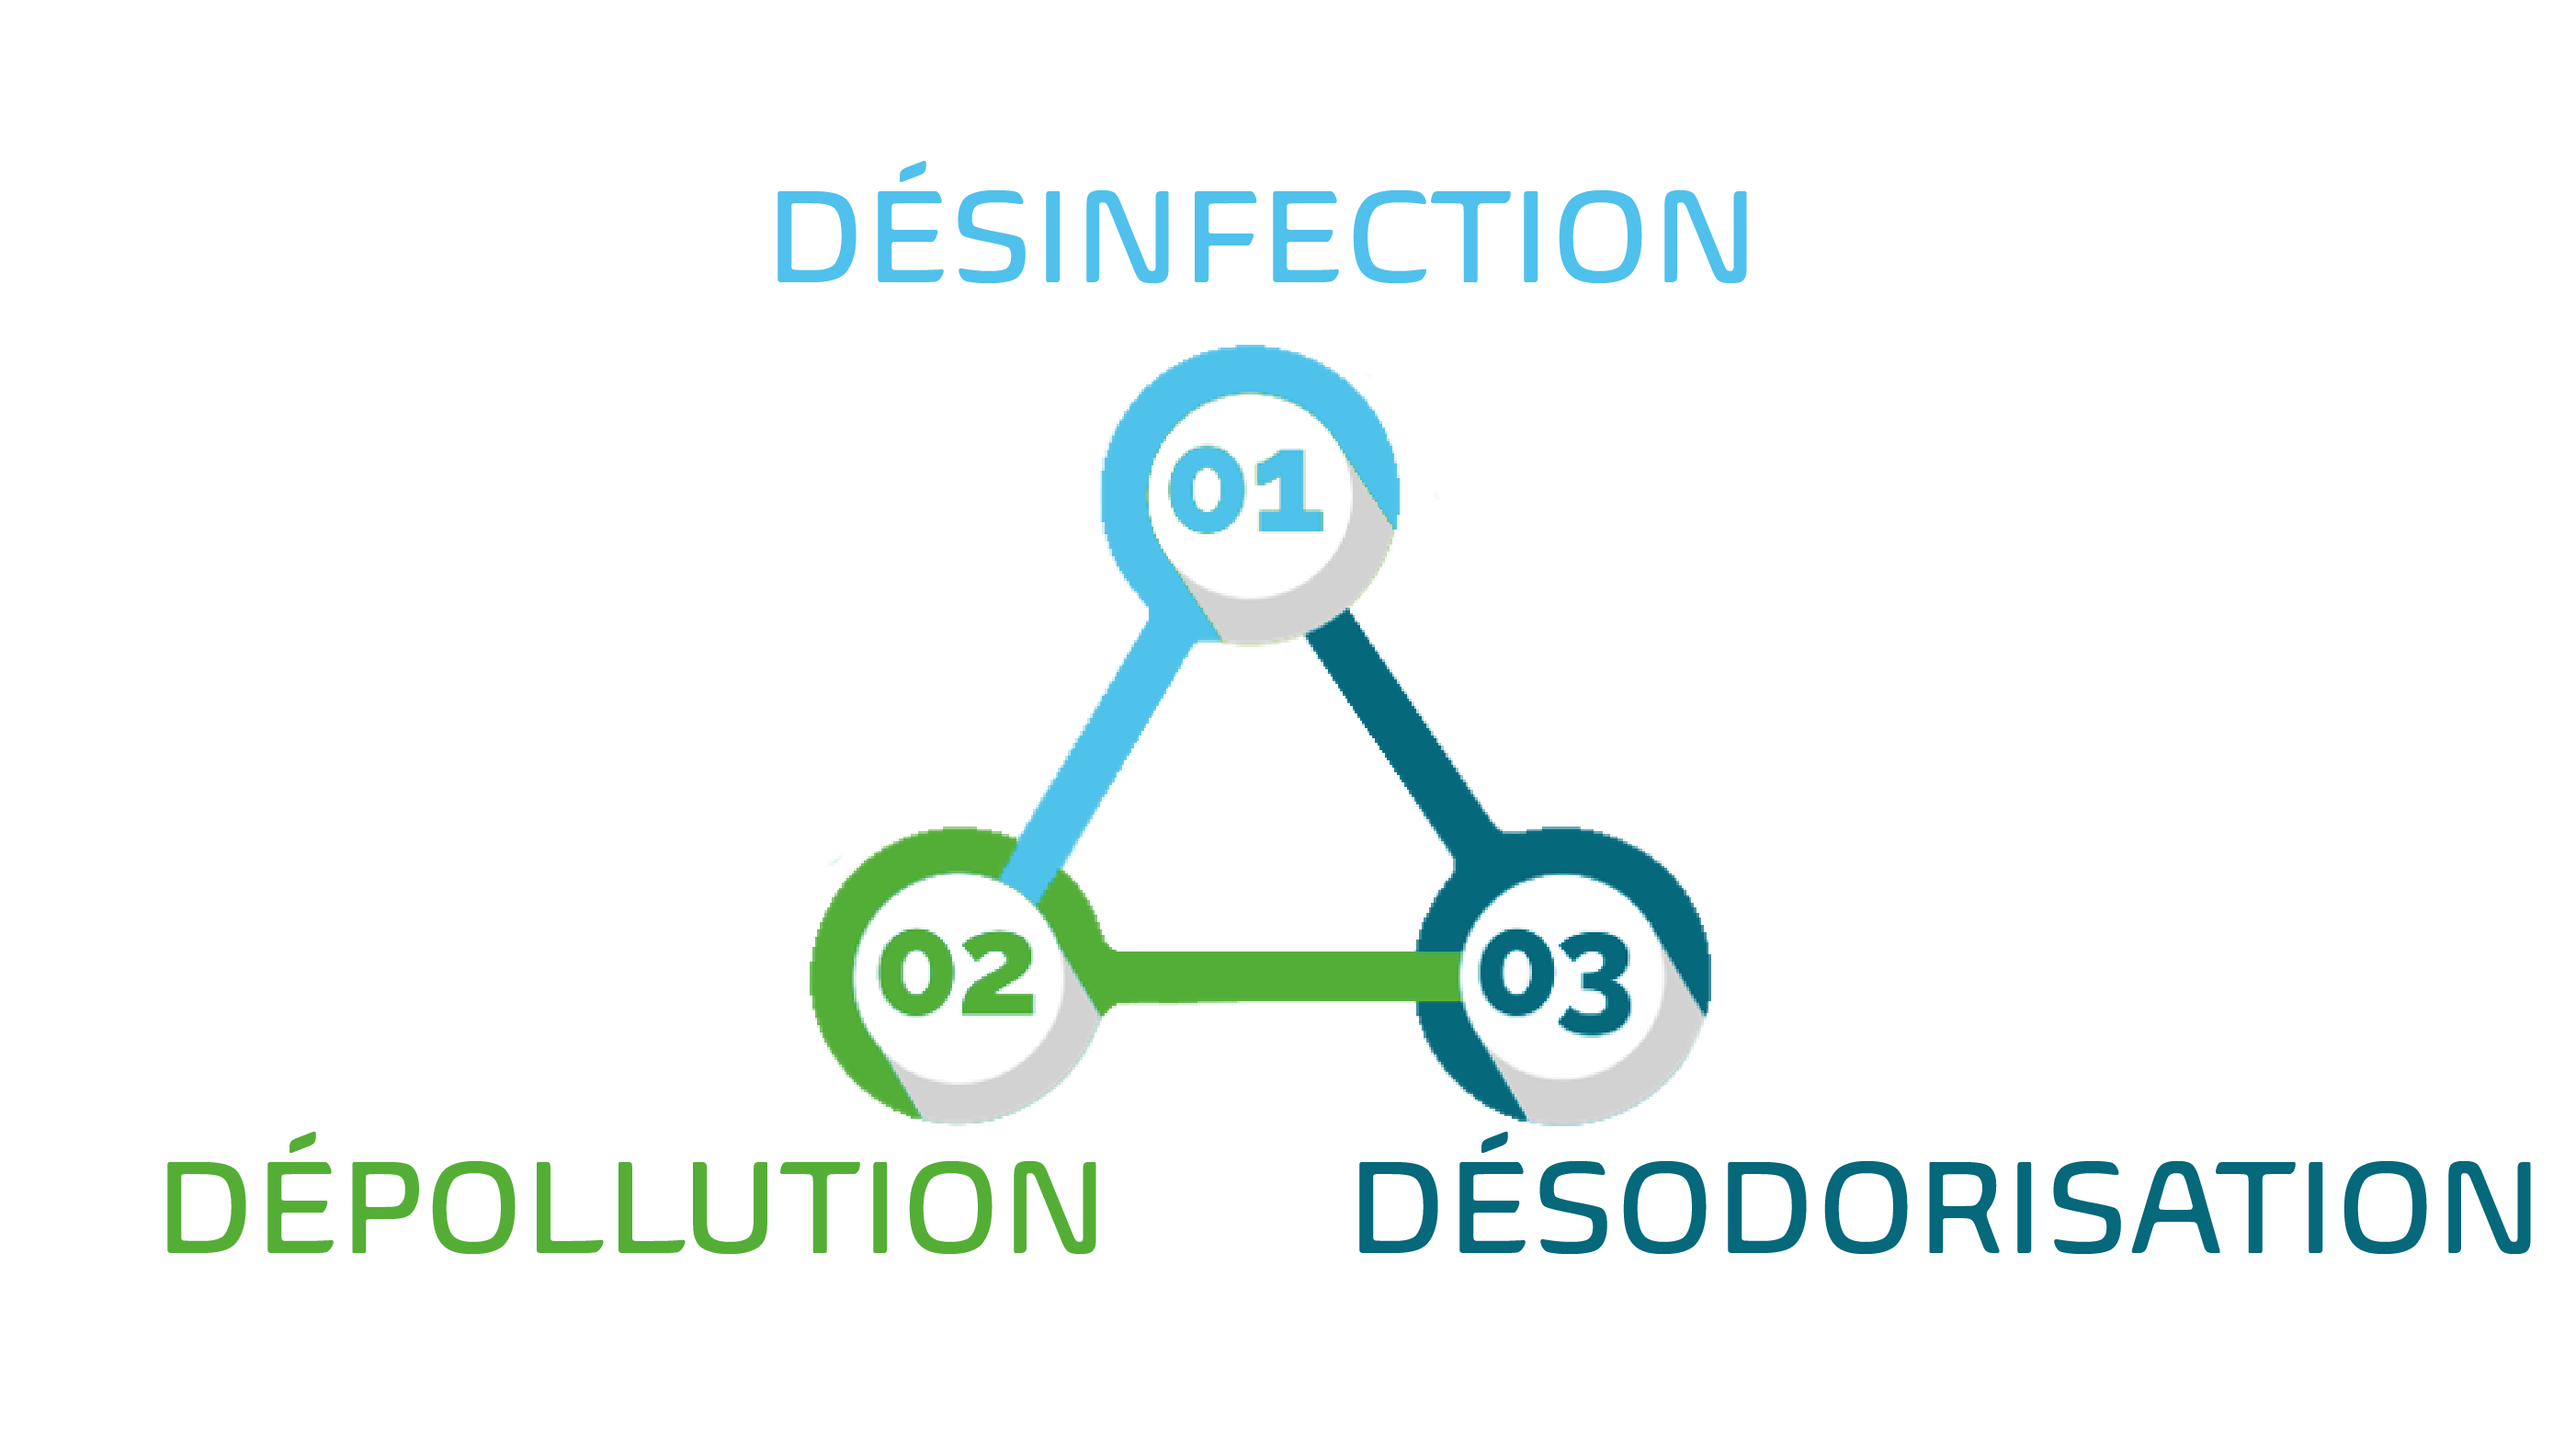 Desinfection depollution desodorisation